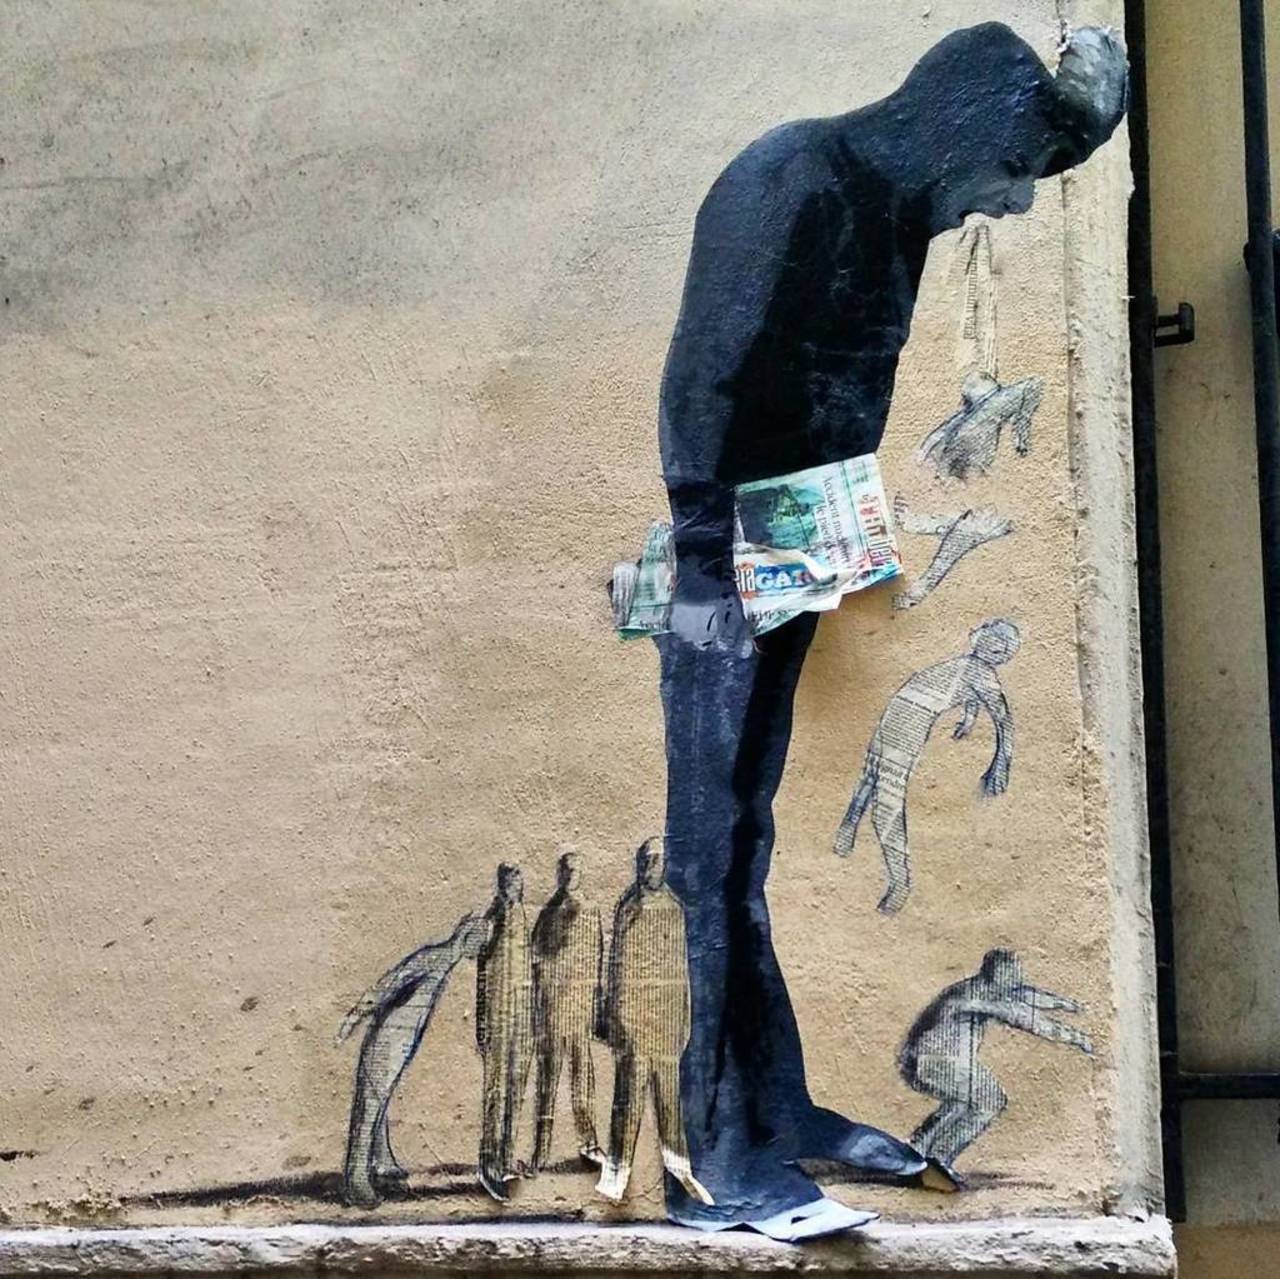 RT @StArtEverywhere: Nice pasteup in Paris

#streetart #streetartparis #parisstreetart #parisgraffiti #graffiti #graffitiart #urbanart #… https://t.co/GRLQDoILBZ